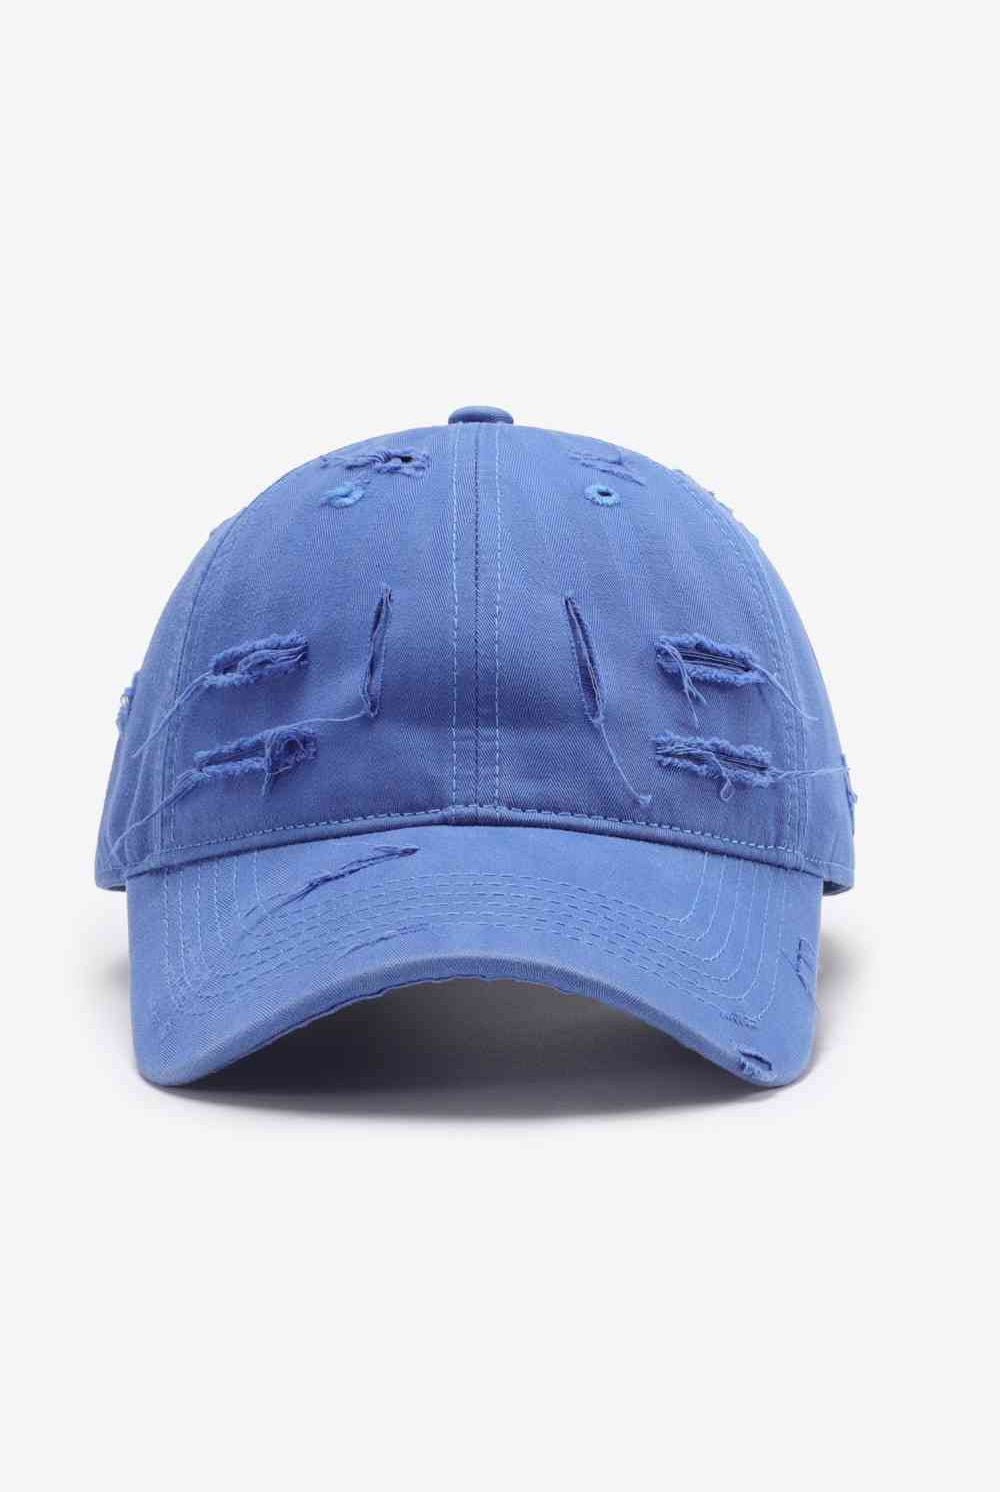 Steel Blue Distressed Adjustable Baseball Cap Gifts